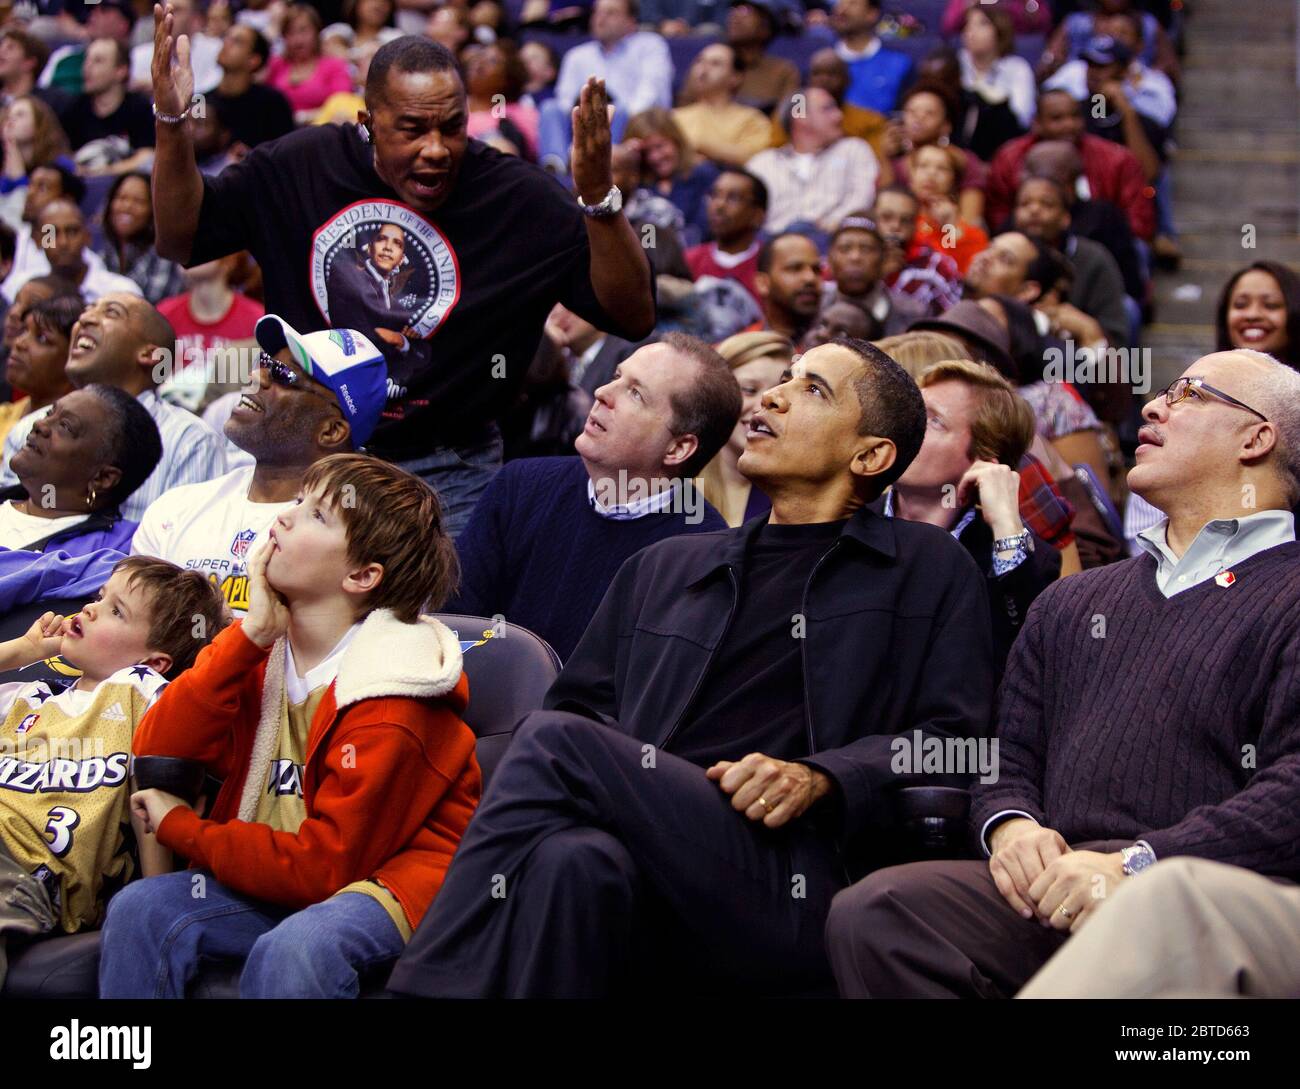 President Barack Obama attends a Washington Wizards vs Chicago Bulls basketball game at the Verizon Center, Washington, D.C 2/27/09. Stock Photo